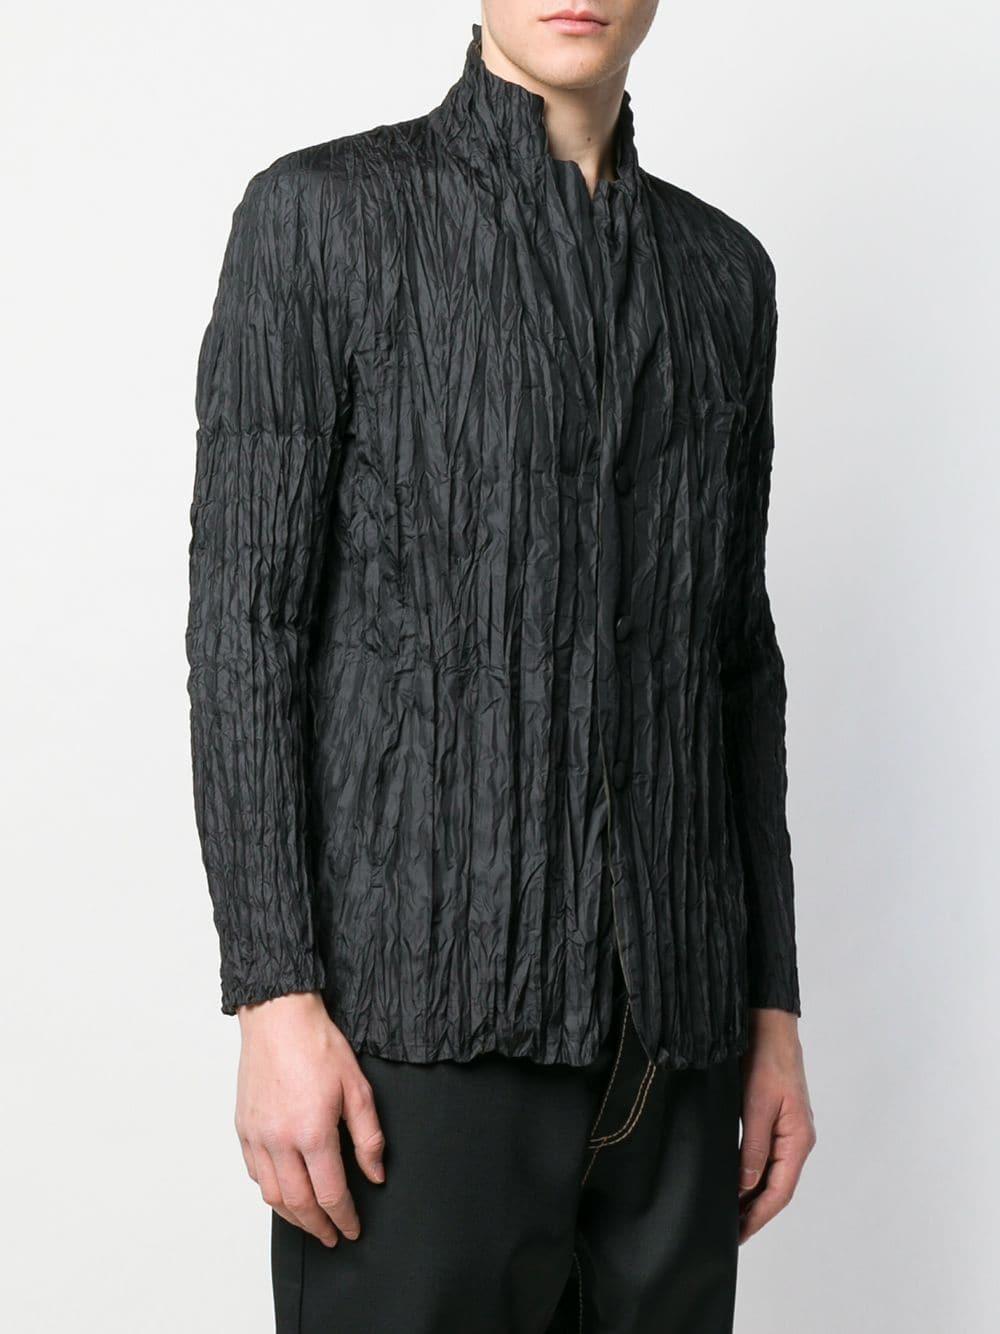 Issey Miyake Crinkle Style Blazer in Black for Men - Lyst